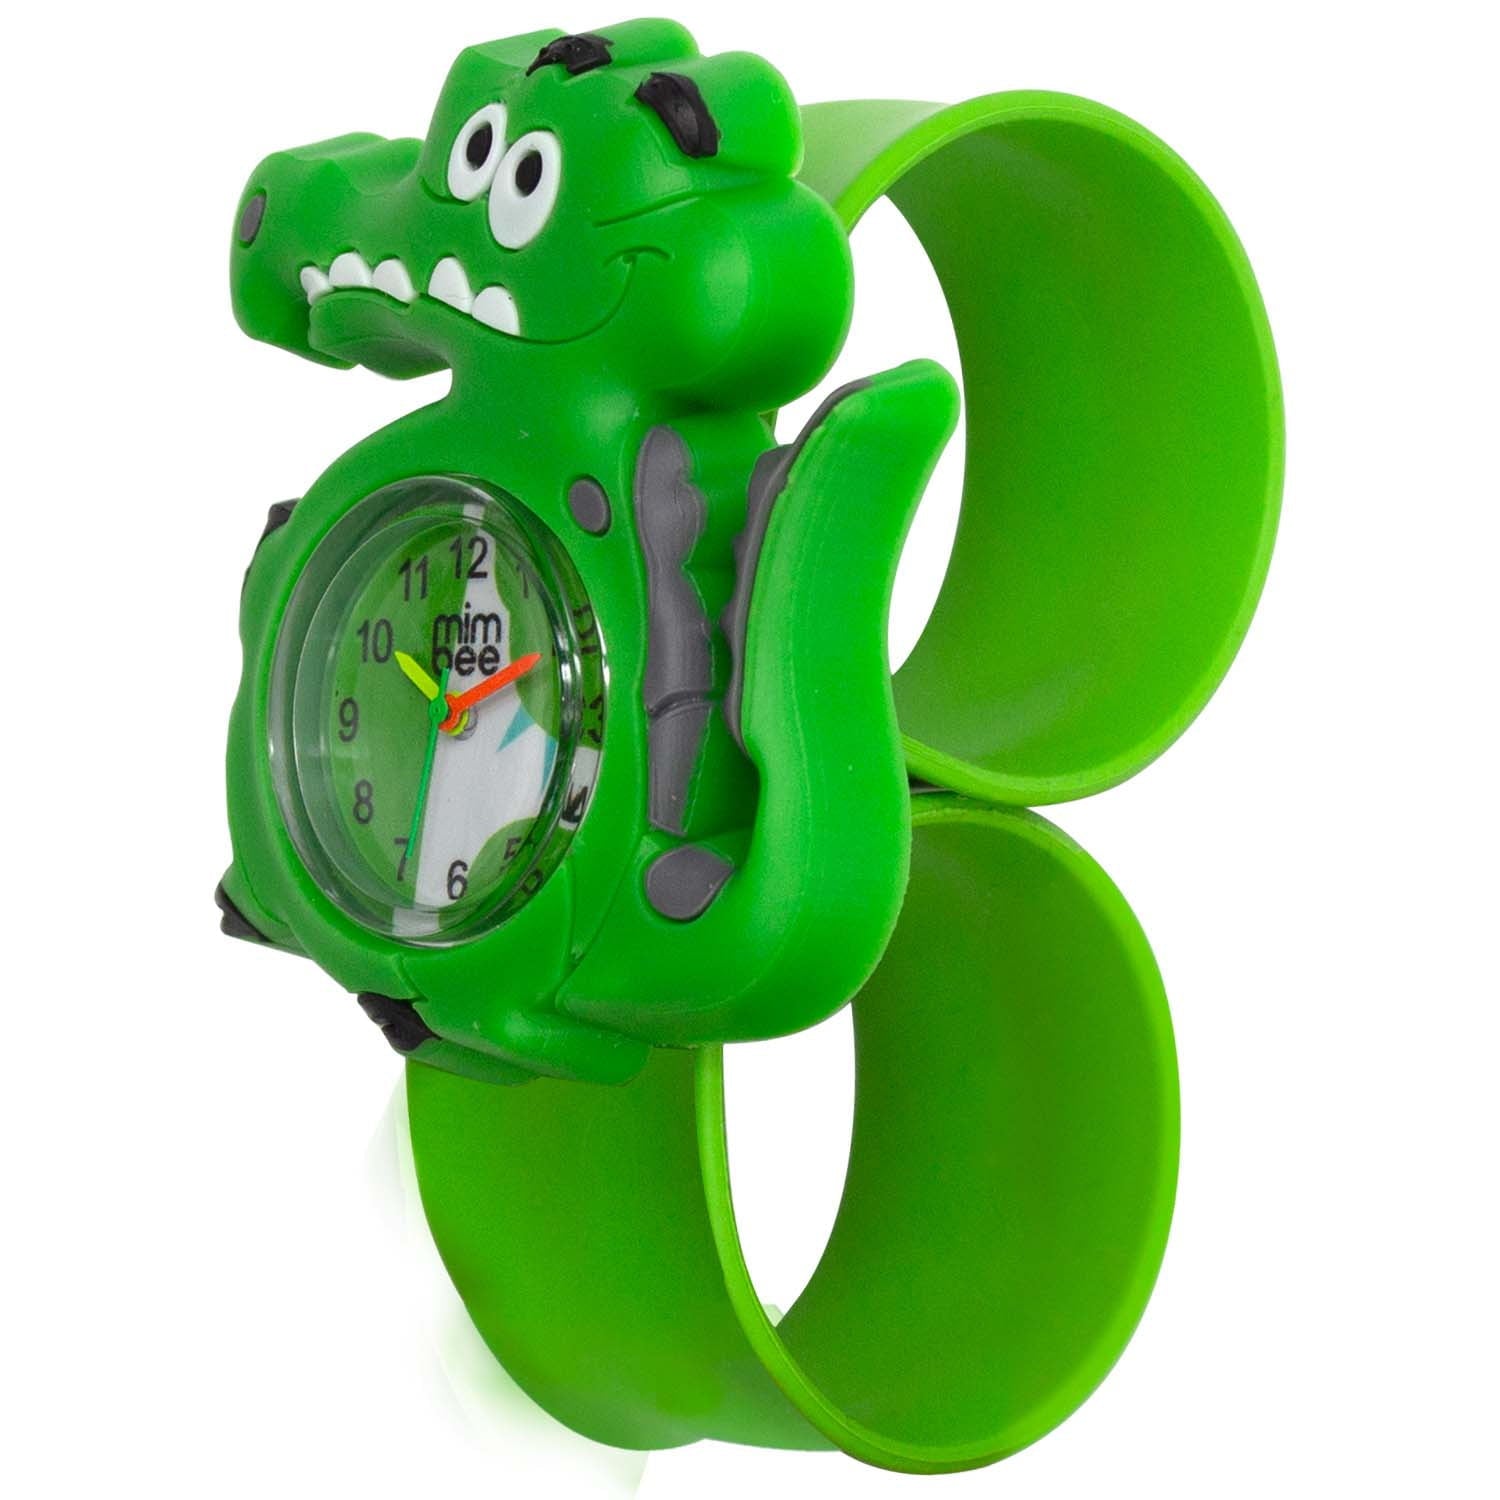 Mimbee - 3D Croc Snap Watch - Premium Snap Watches from Mimbee Kids - Just R 130! Shop now at Mimbee Kids